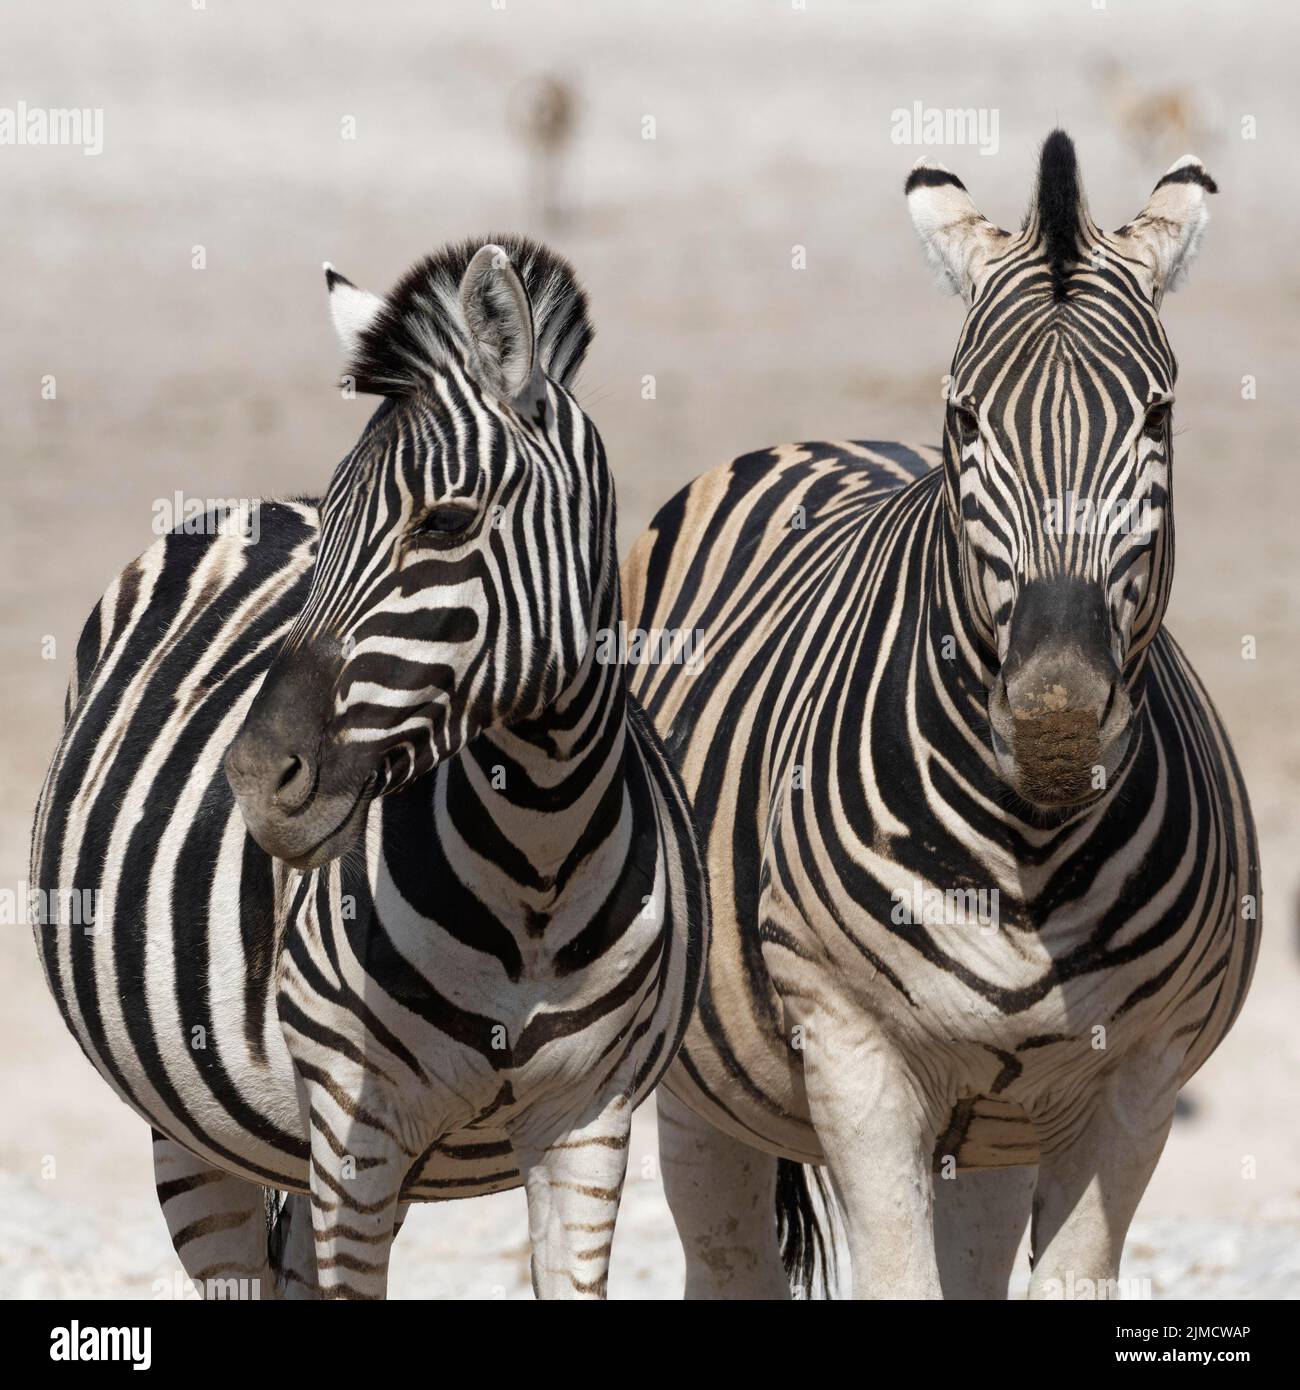 Burchells zebras (Equus quagga burchellii), pair of zebras, standing side by side, animals portrait, Etosha National Park, Namibia, Africa Stock Photo